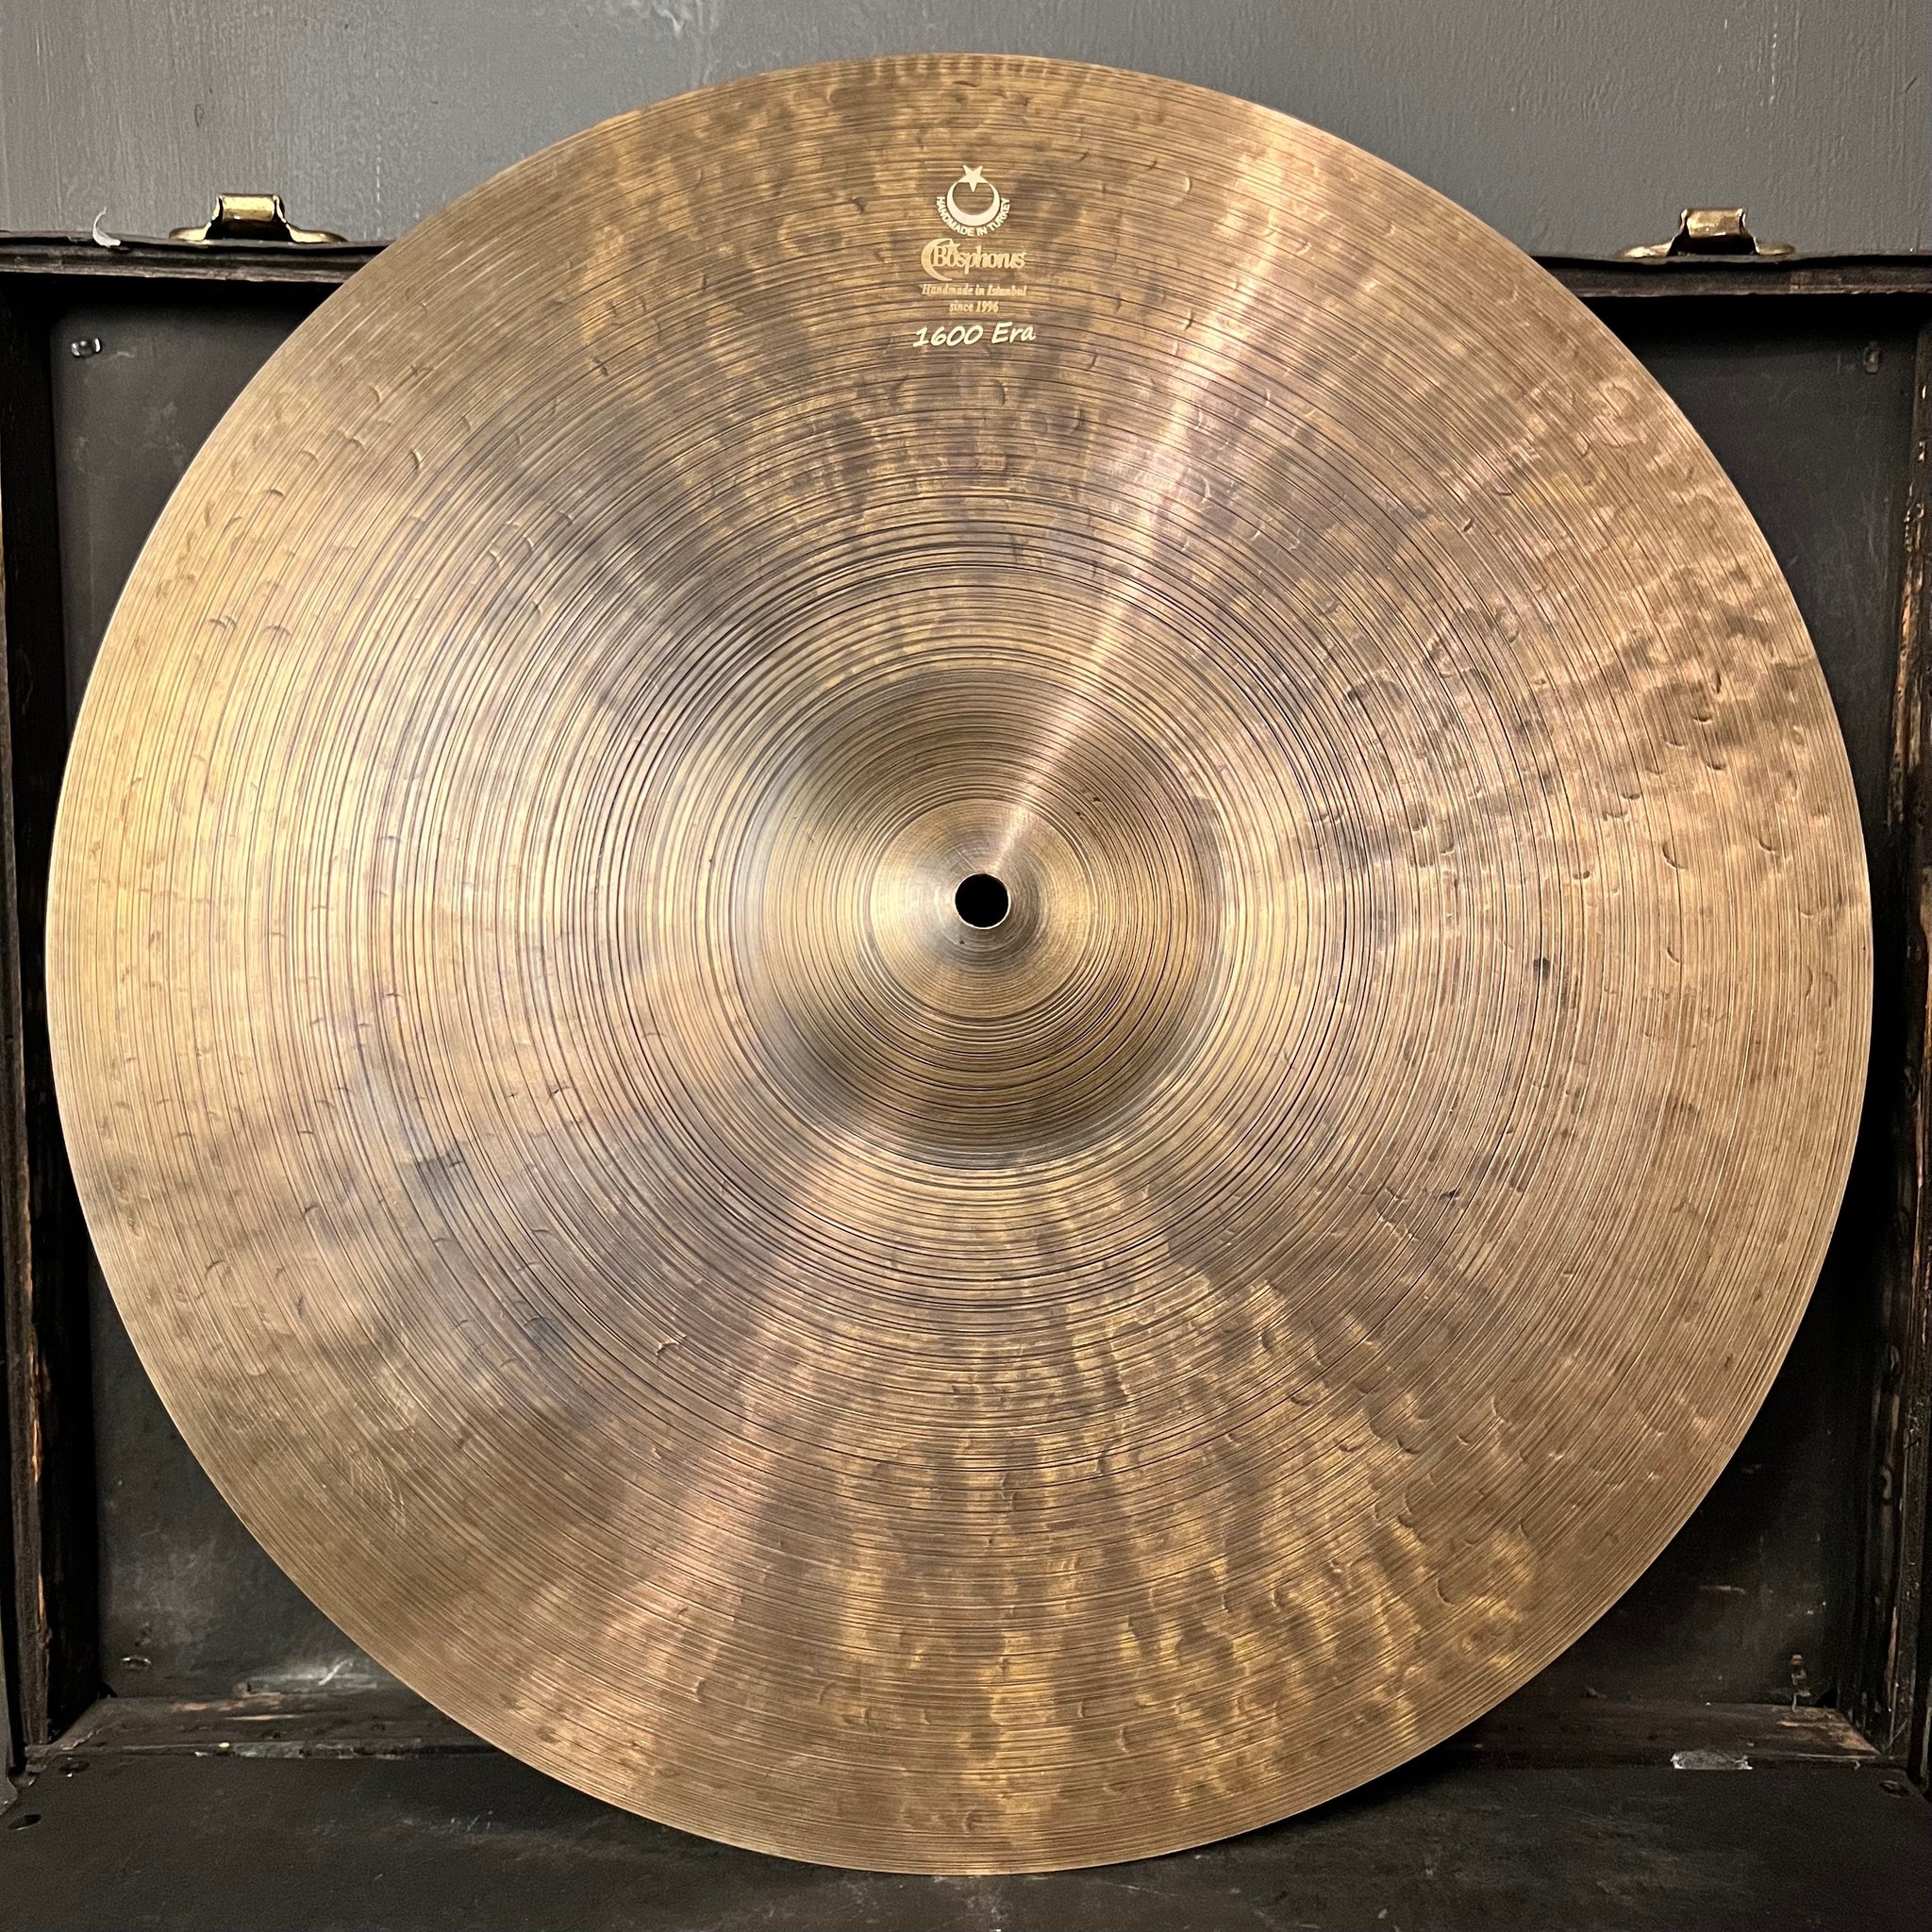 NEW Bosphorus 18" 1600 Era Crash Cymbal - 1370g